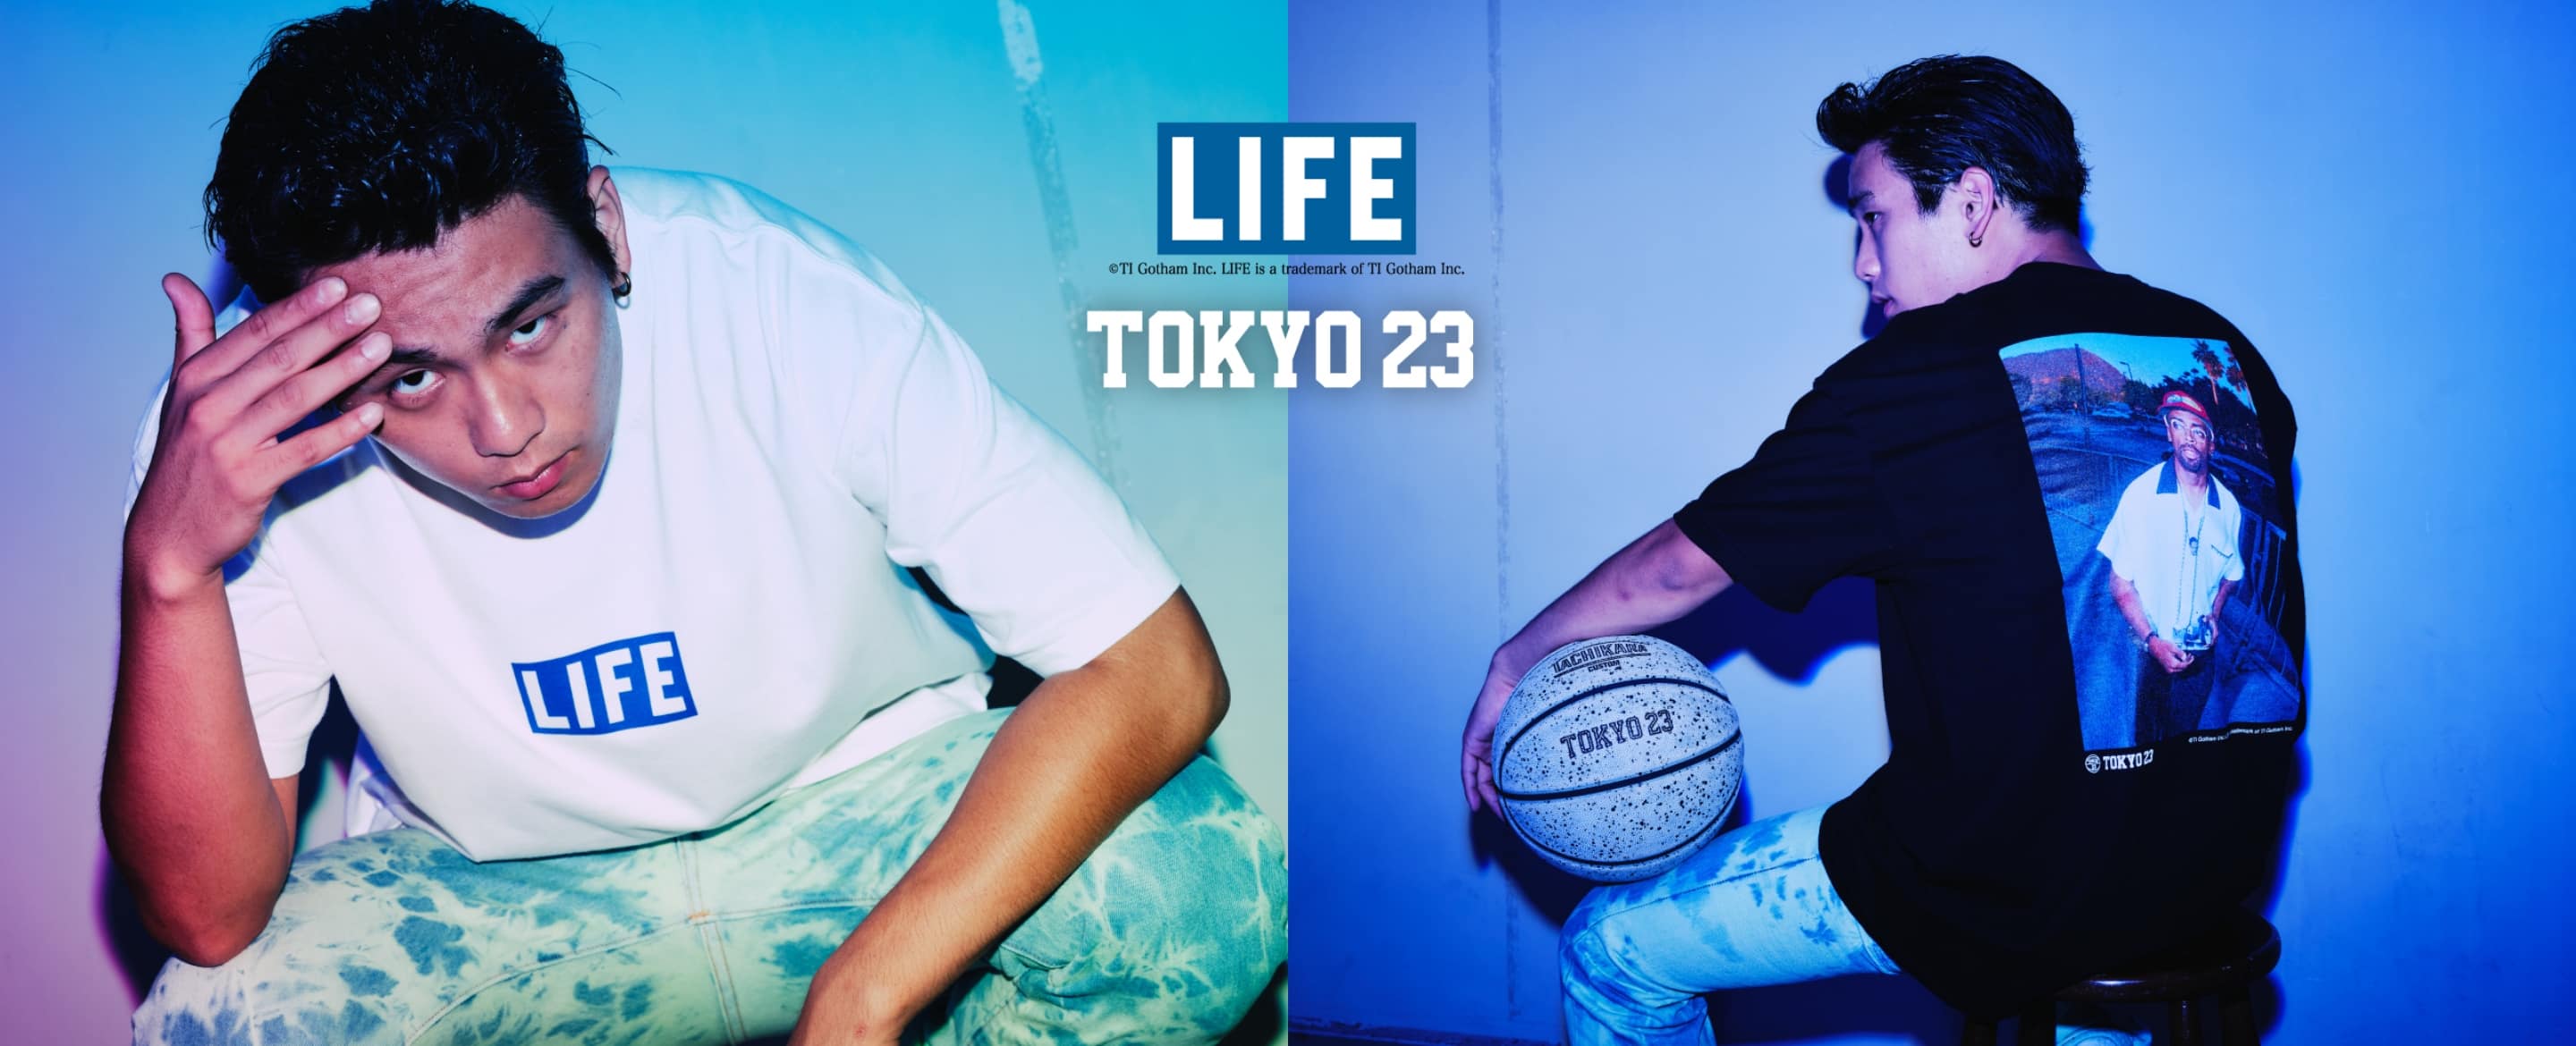 tokyo23-life-lp